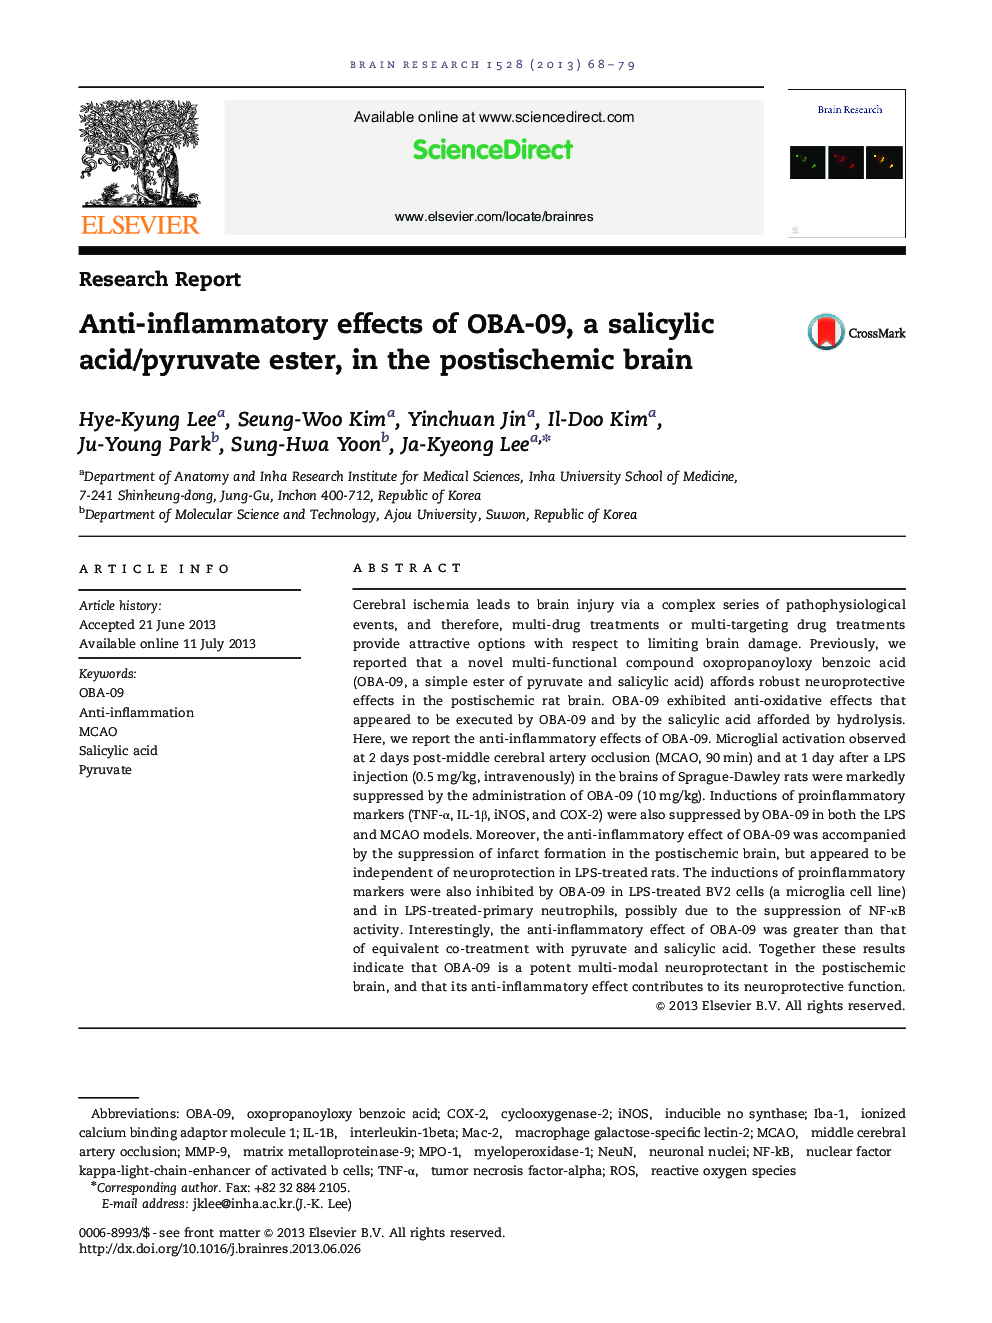 Research ReportAnti-inflammatory effects of OBA-09, a salicylic acid/pyruvate ester, in the postischemic brain